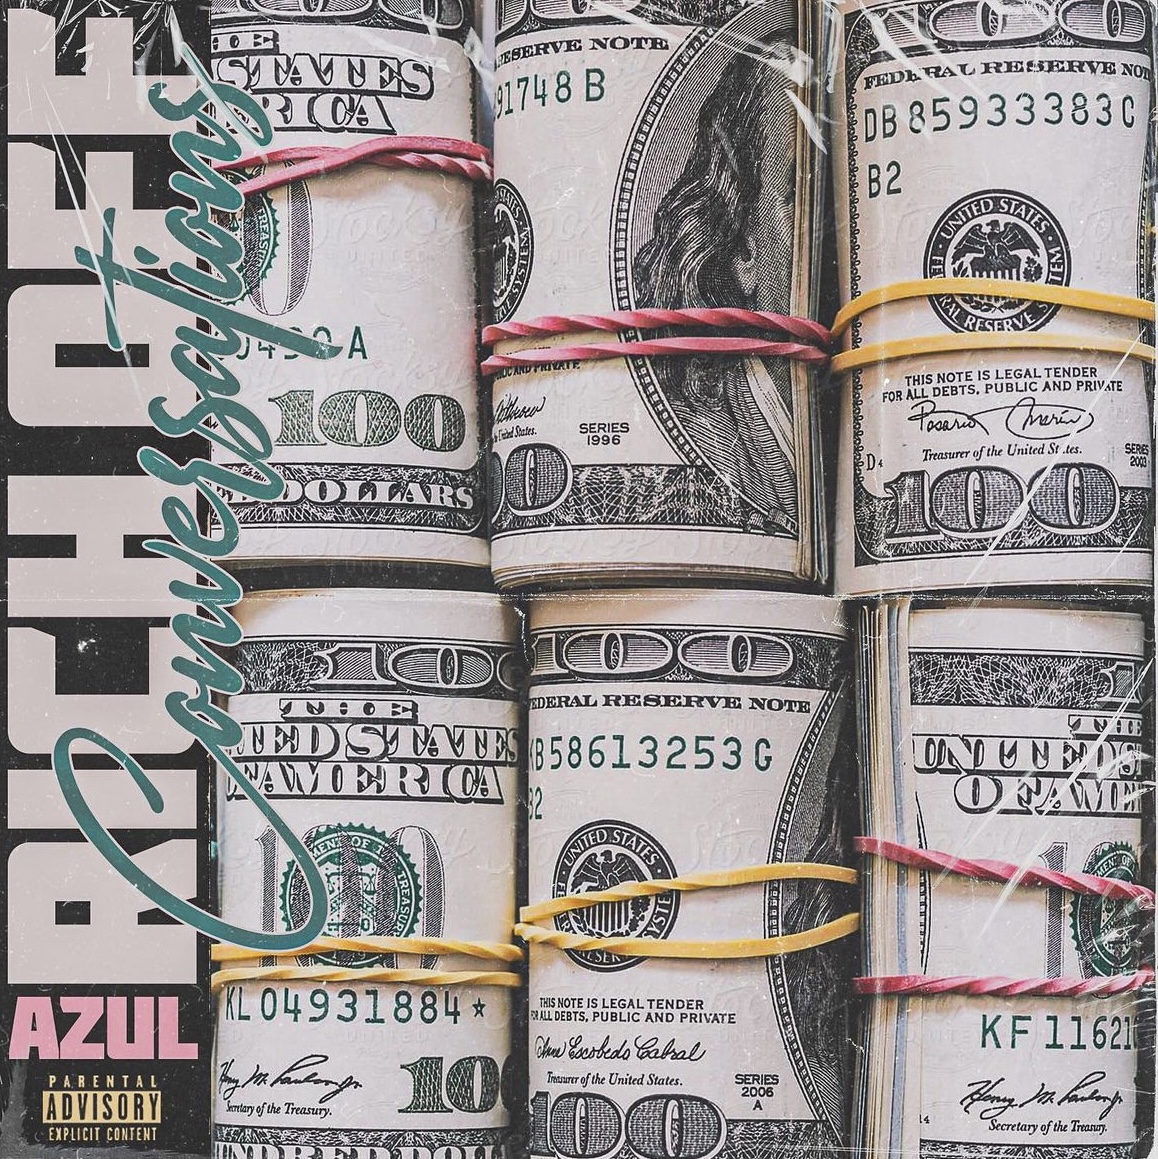 AZUL Releases Debut Album, ‘Rich Off Conversations’